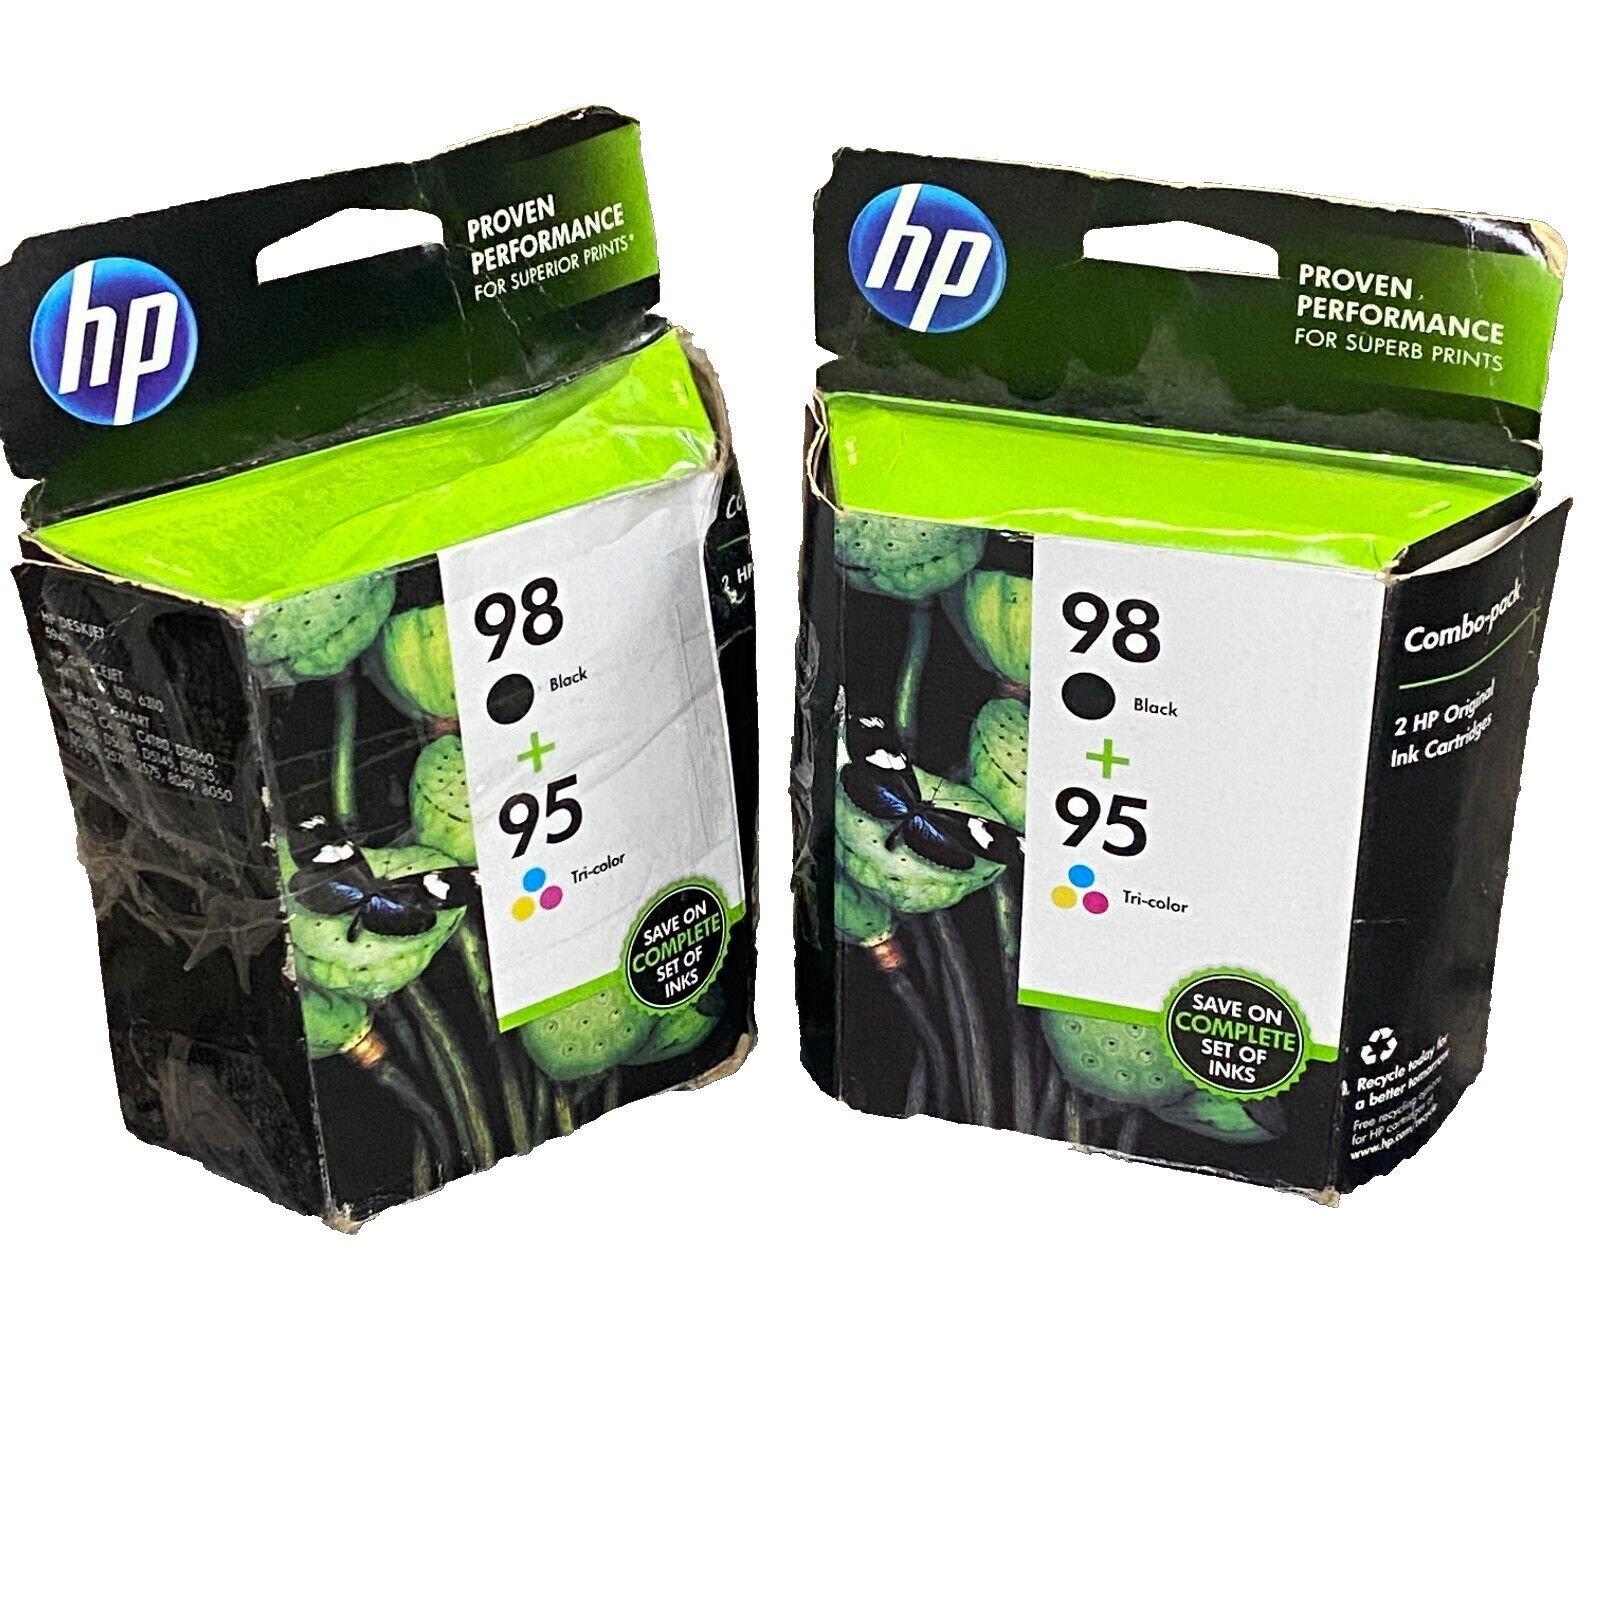 NEW Genuine HP 98 Black & HP 95 Tri-color Ink Combo CB327FN OEM Expired APR 2017